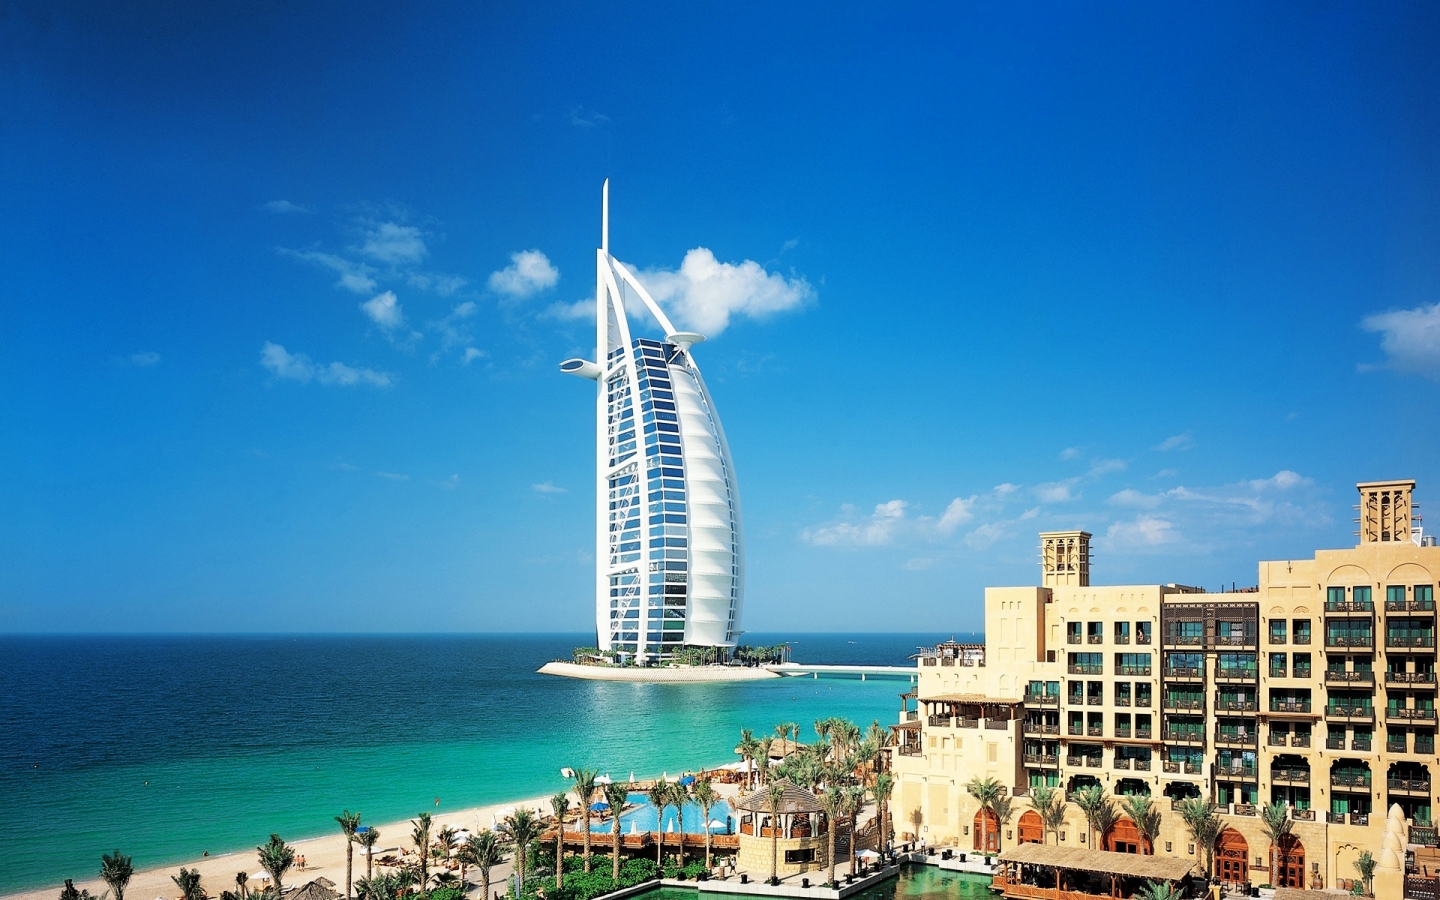 Dubai Burj Al Arab Hotel for 1440 x 900 widescreen resolution